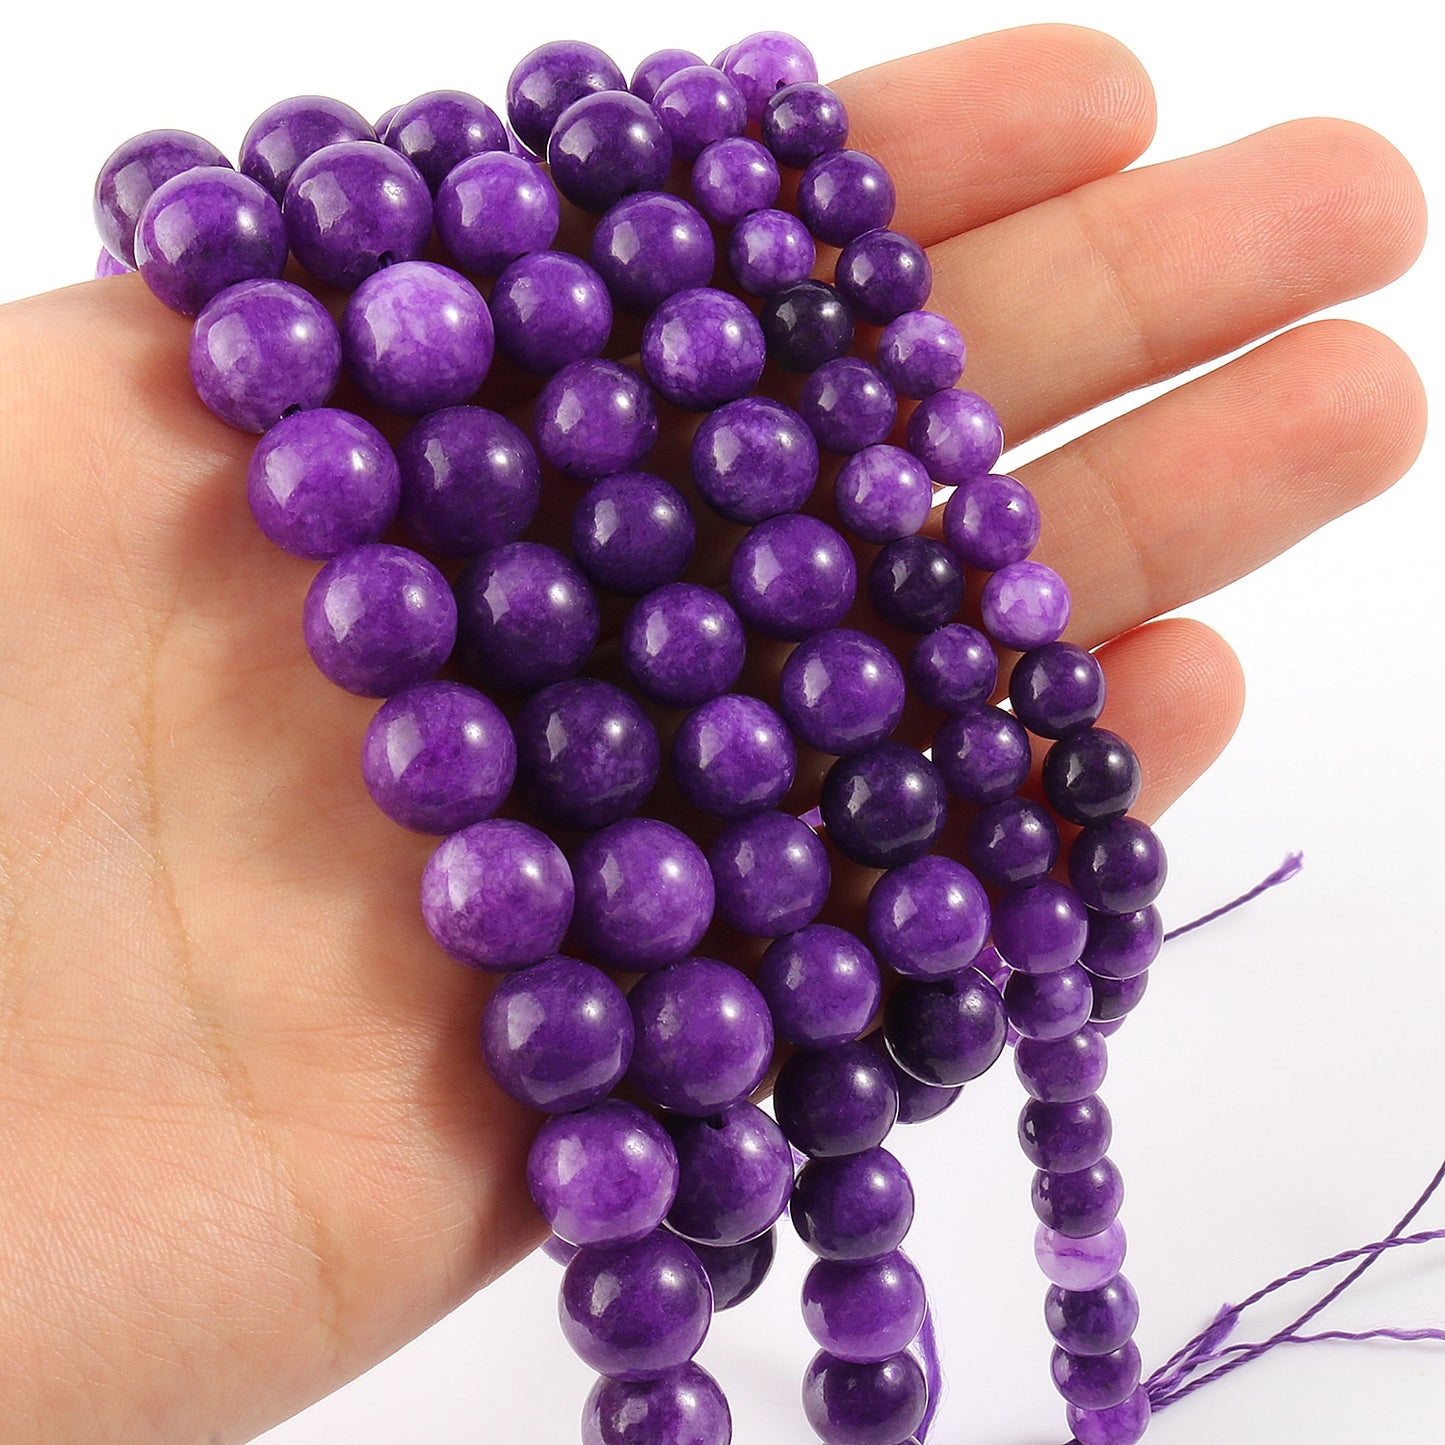 Stone Dark Purple Sugilite Jades Round Loose Beads